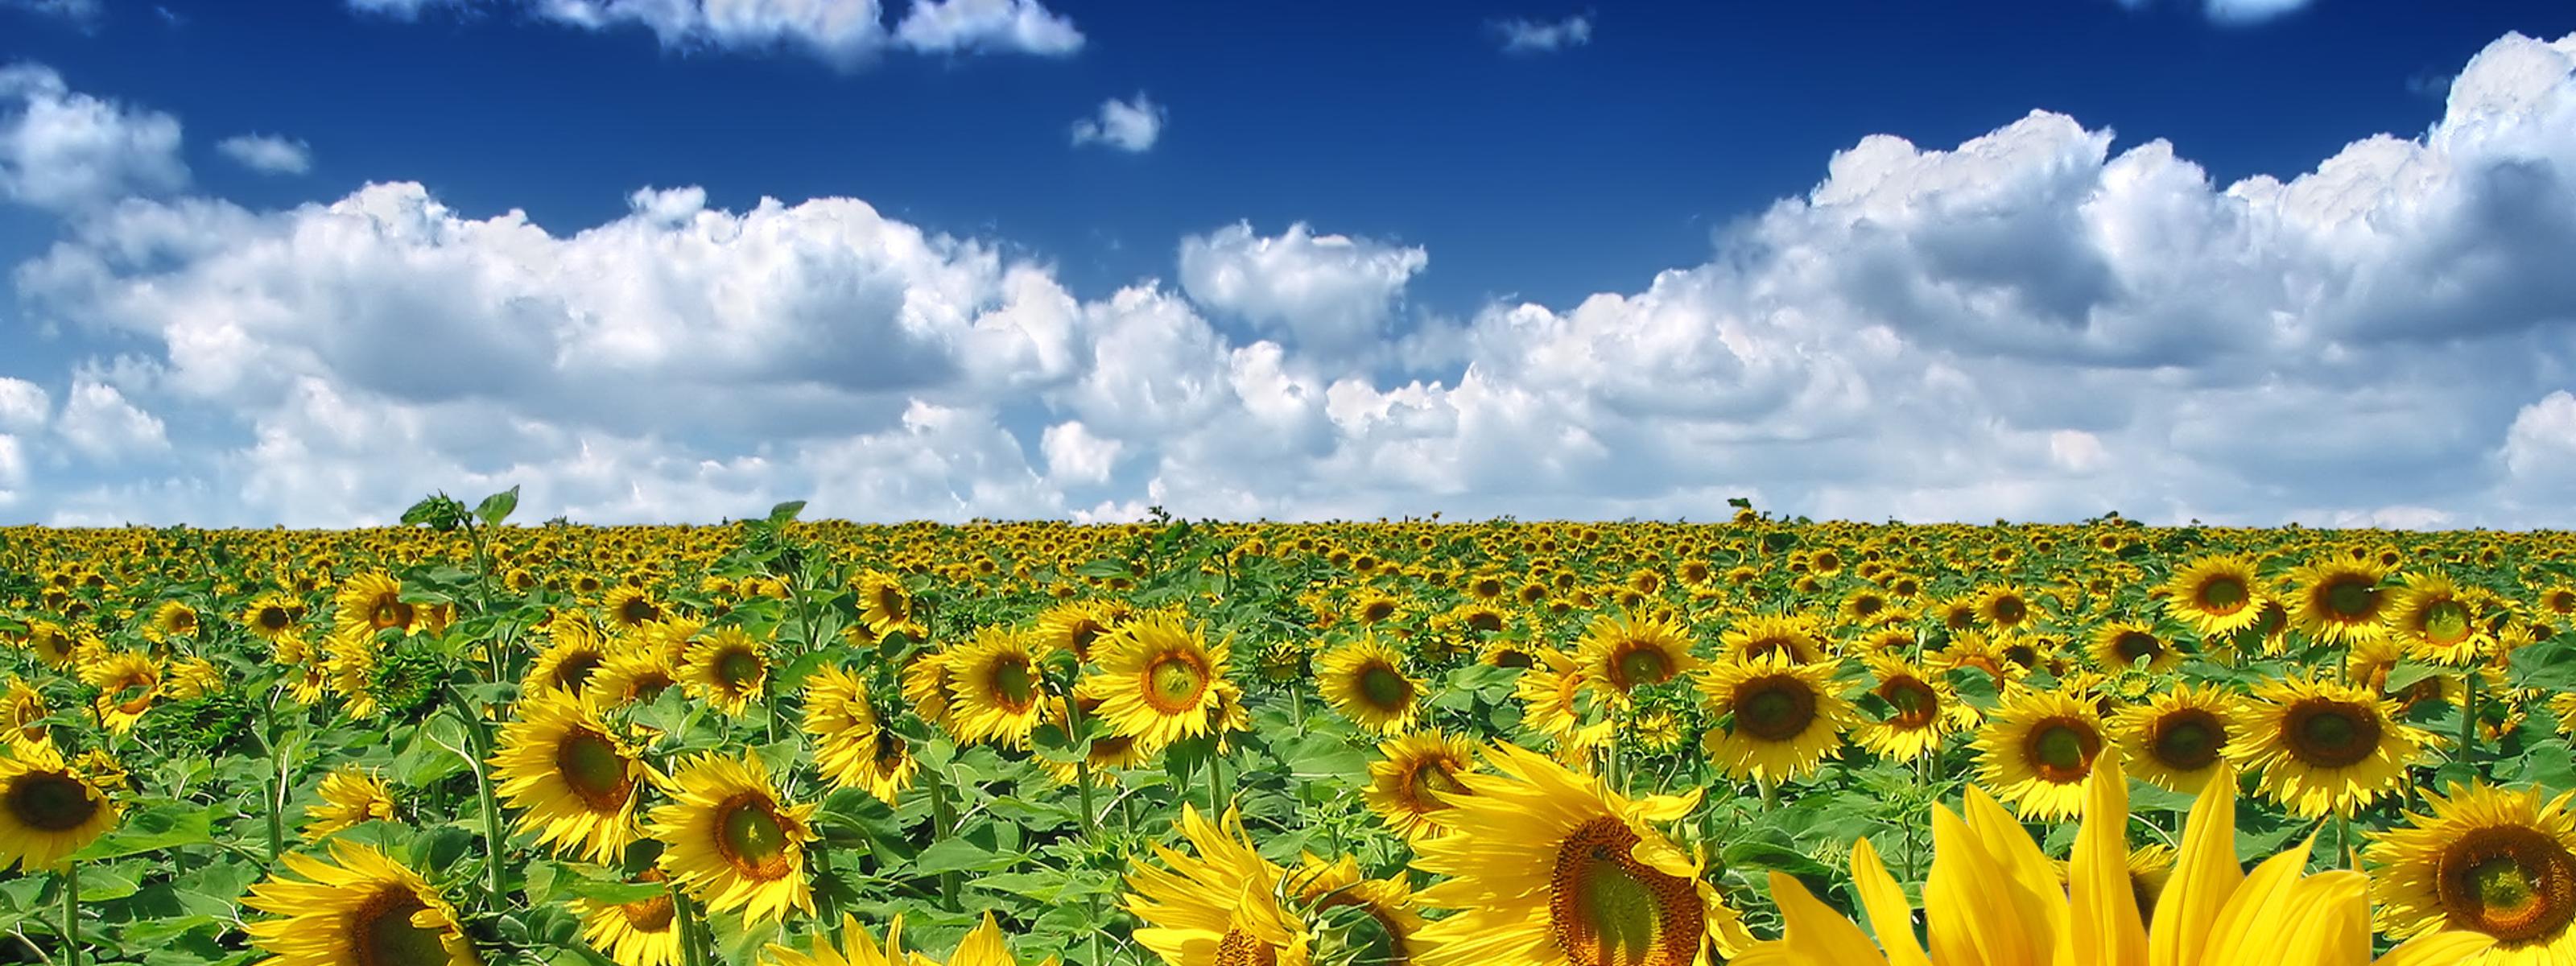 Download Golden Sunflower field in a summer hot day Dual 1600x1200.